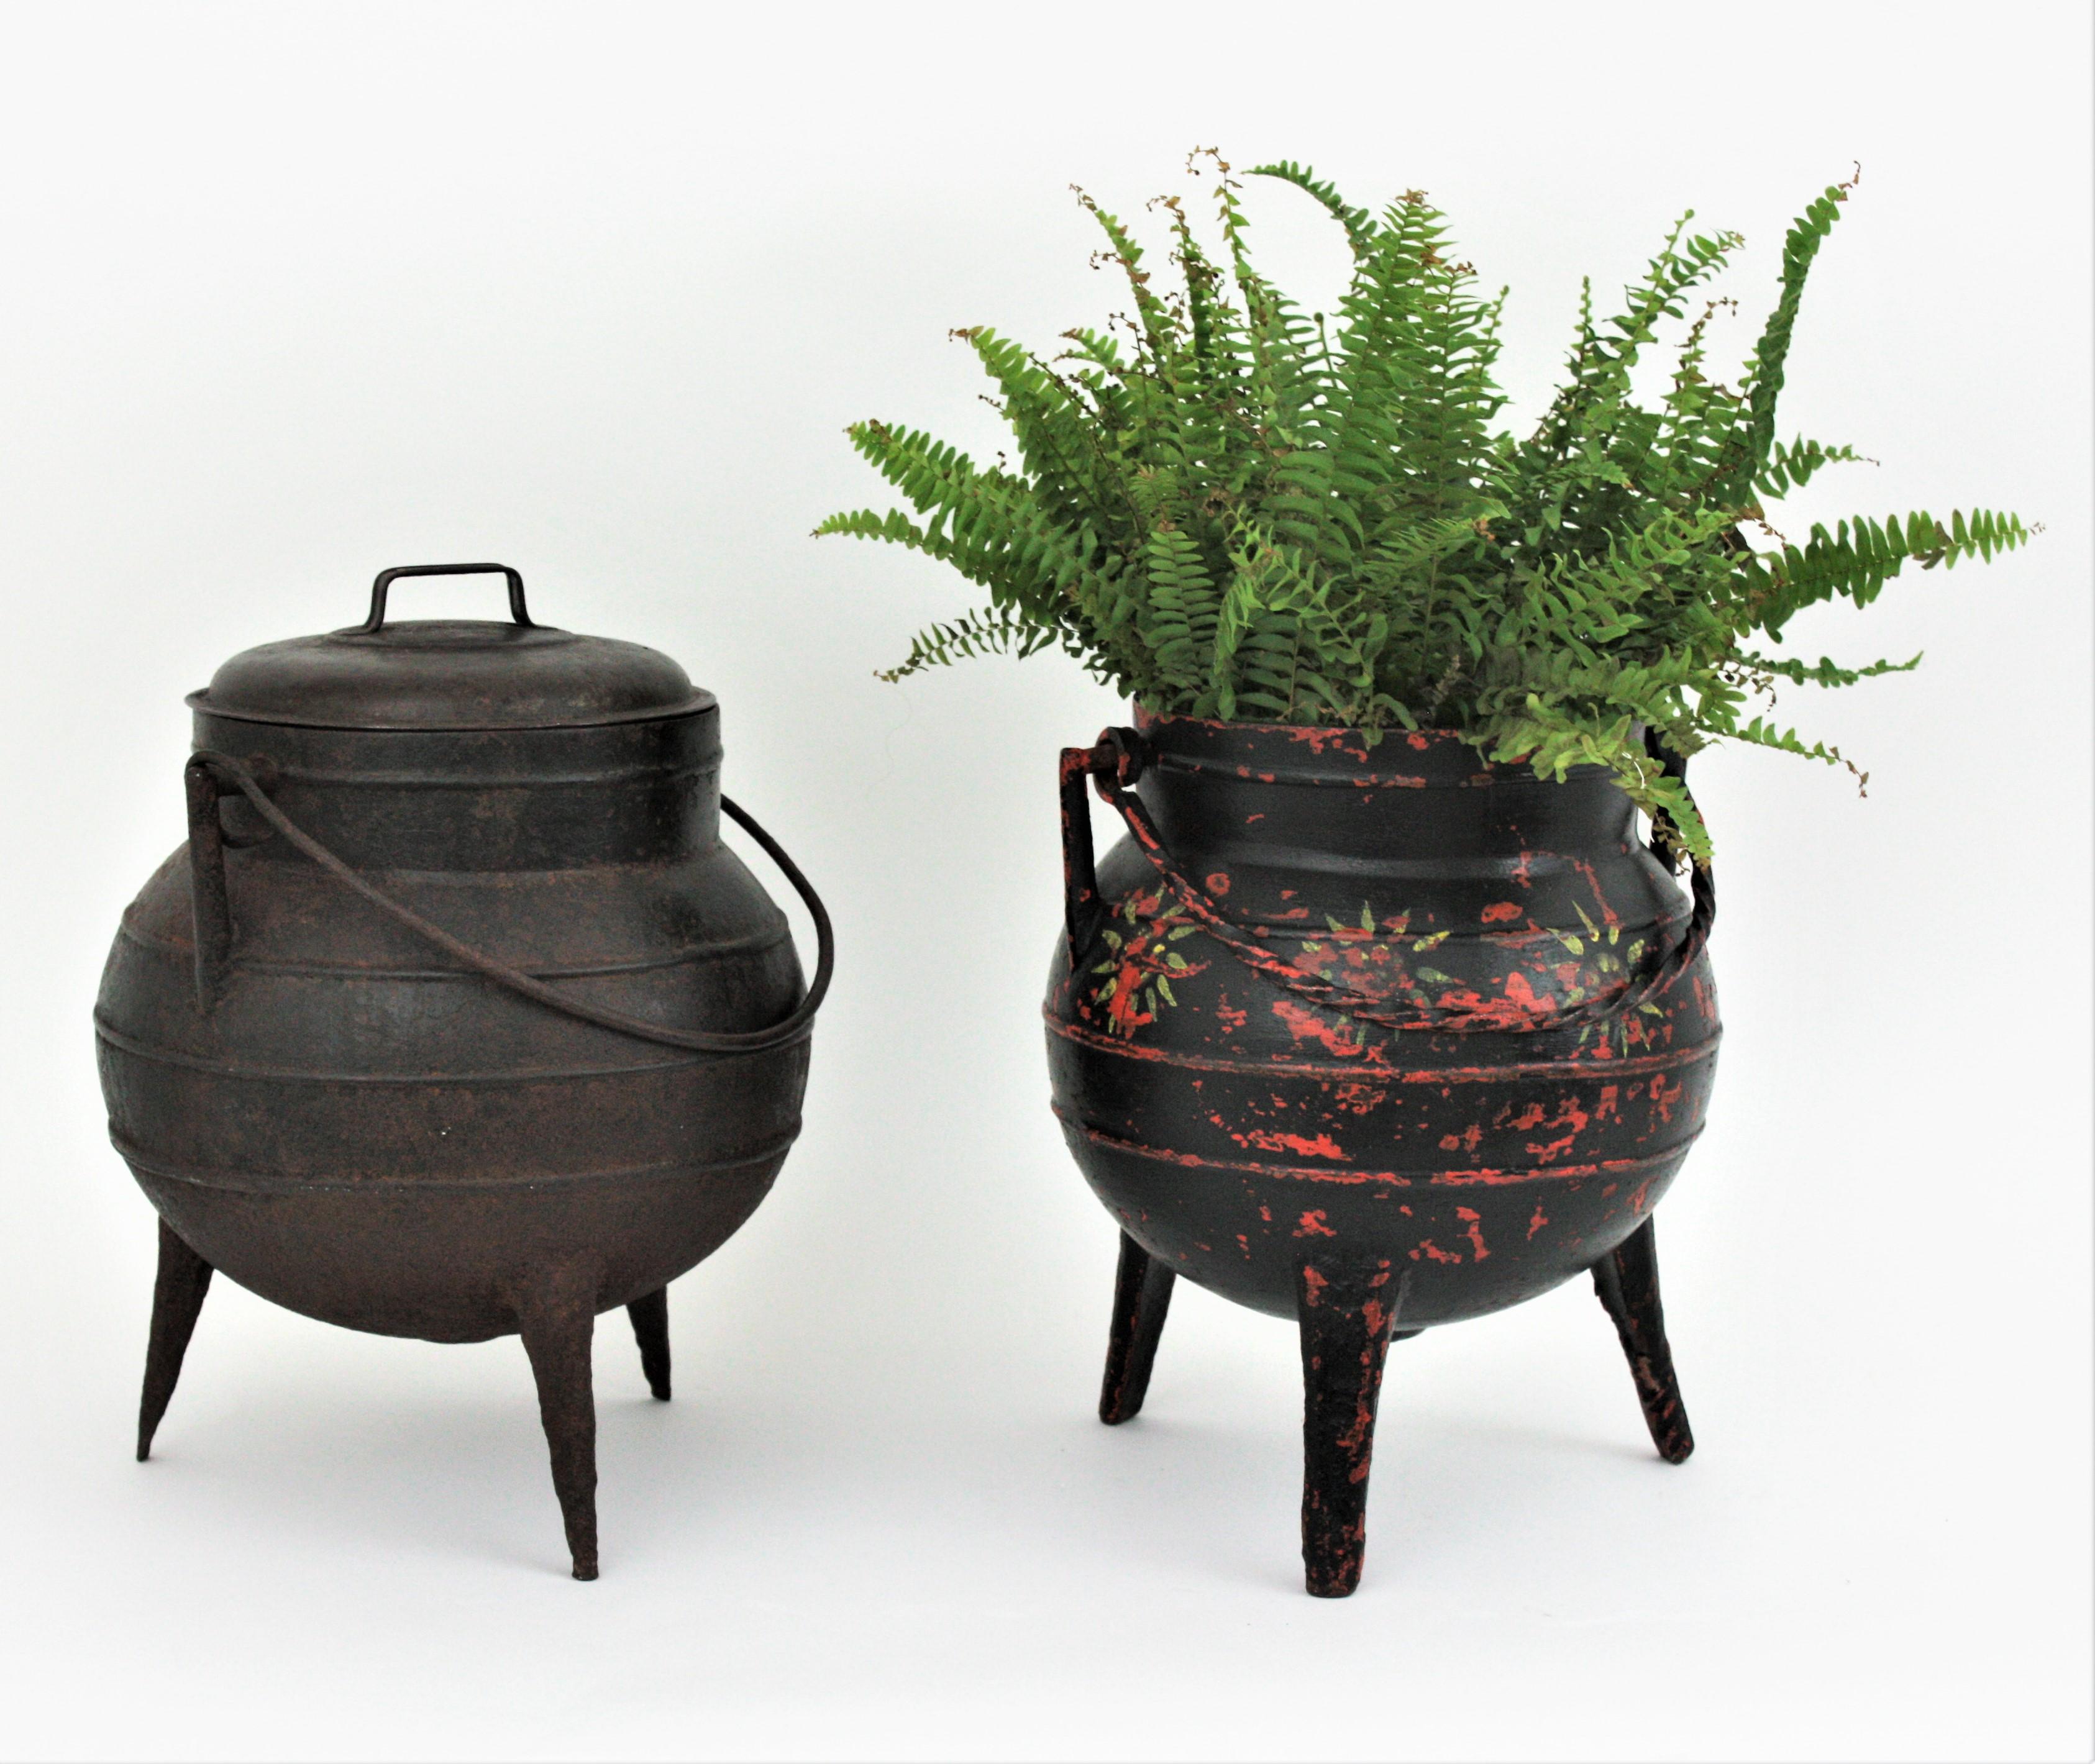 cauldron shaped cooking pot